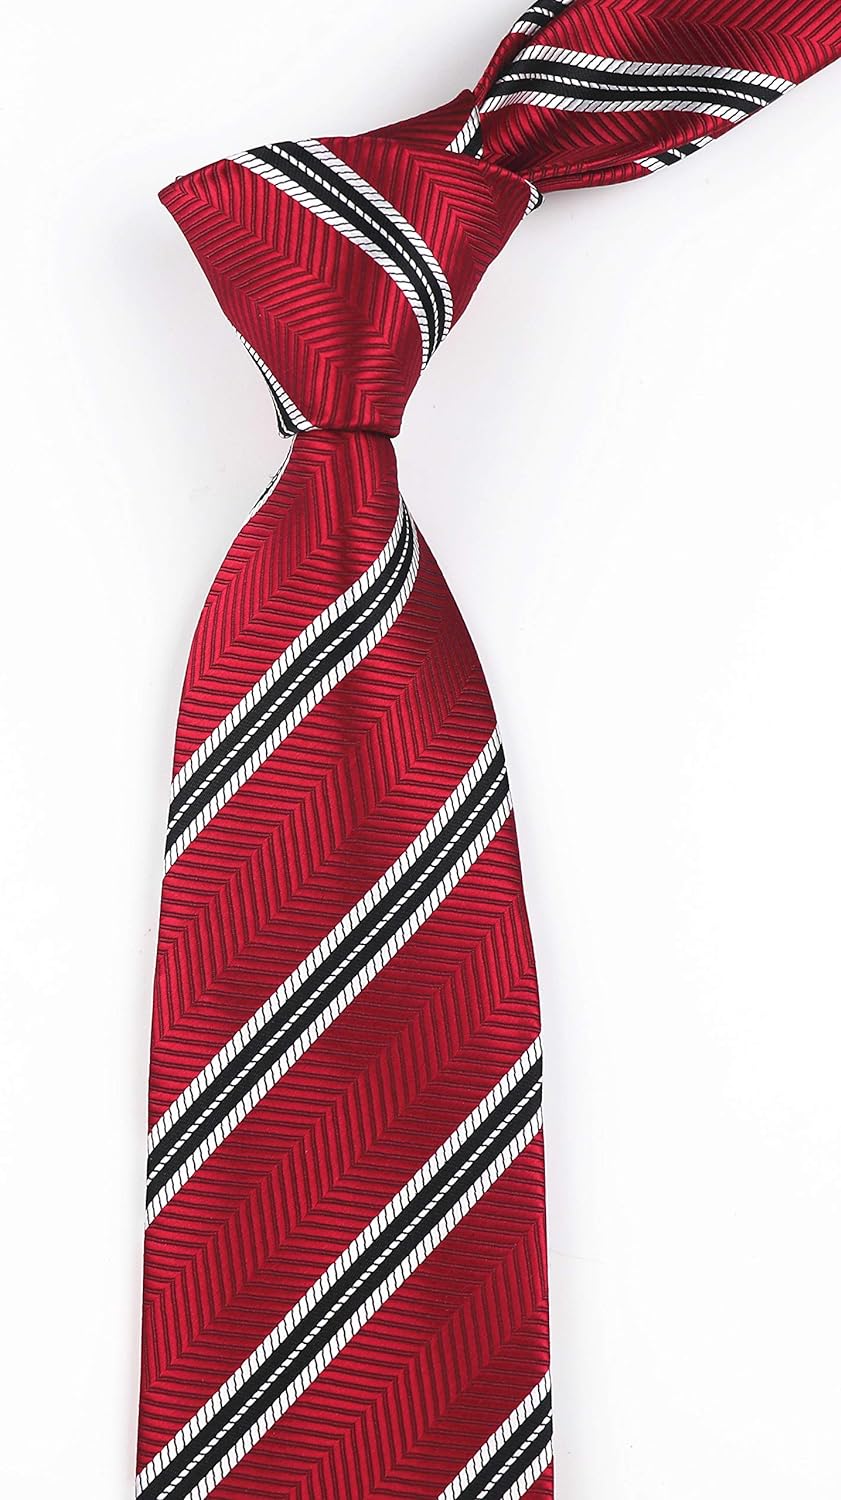 Men's Classic Stripe Red and Black Jacquard Woven Necktie